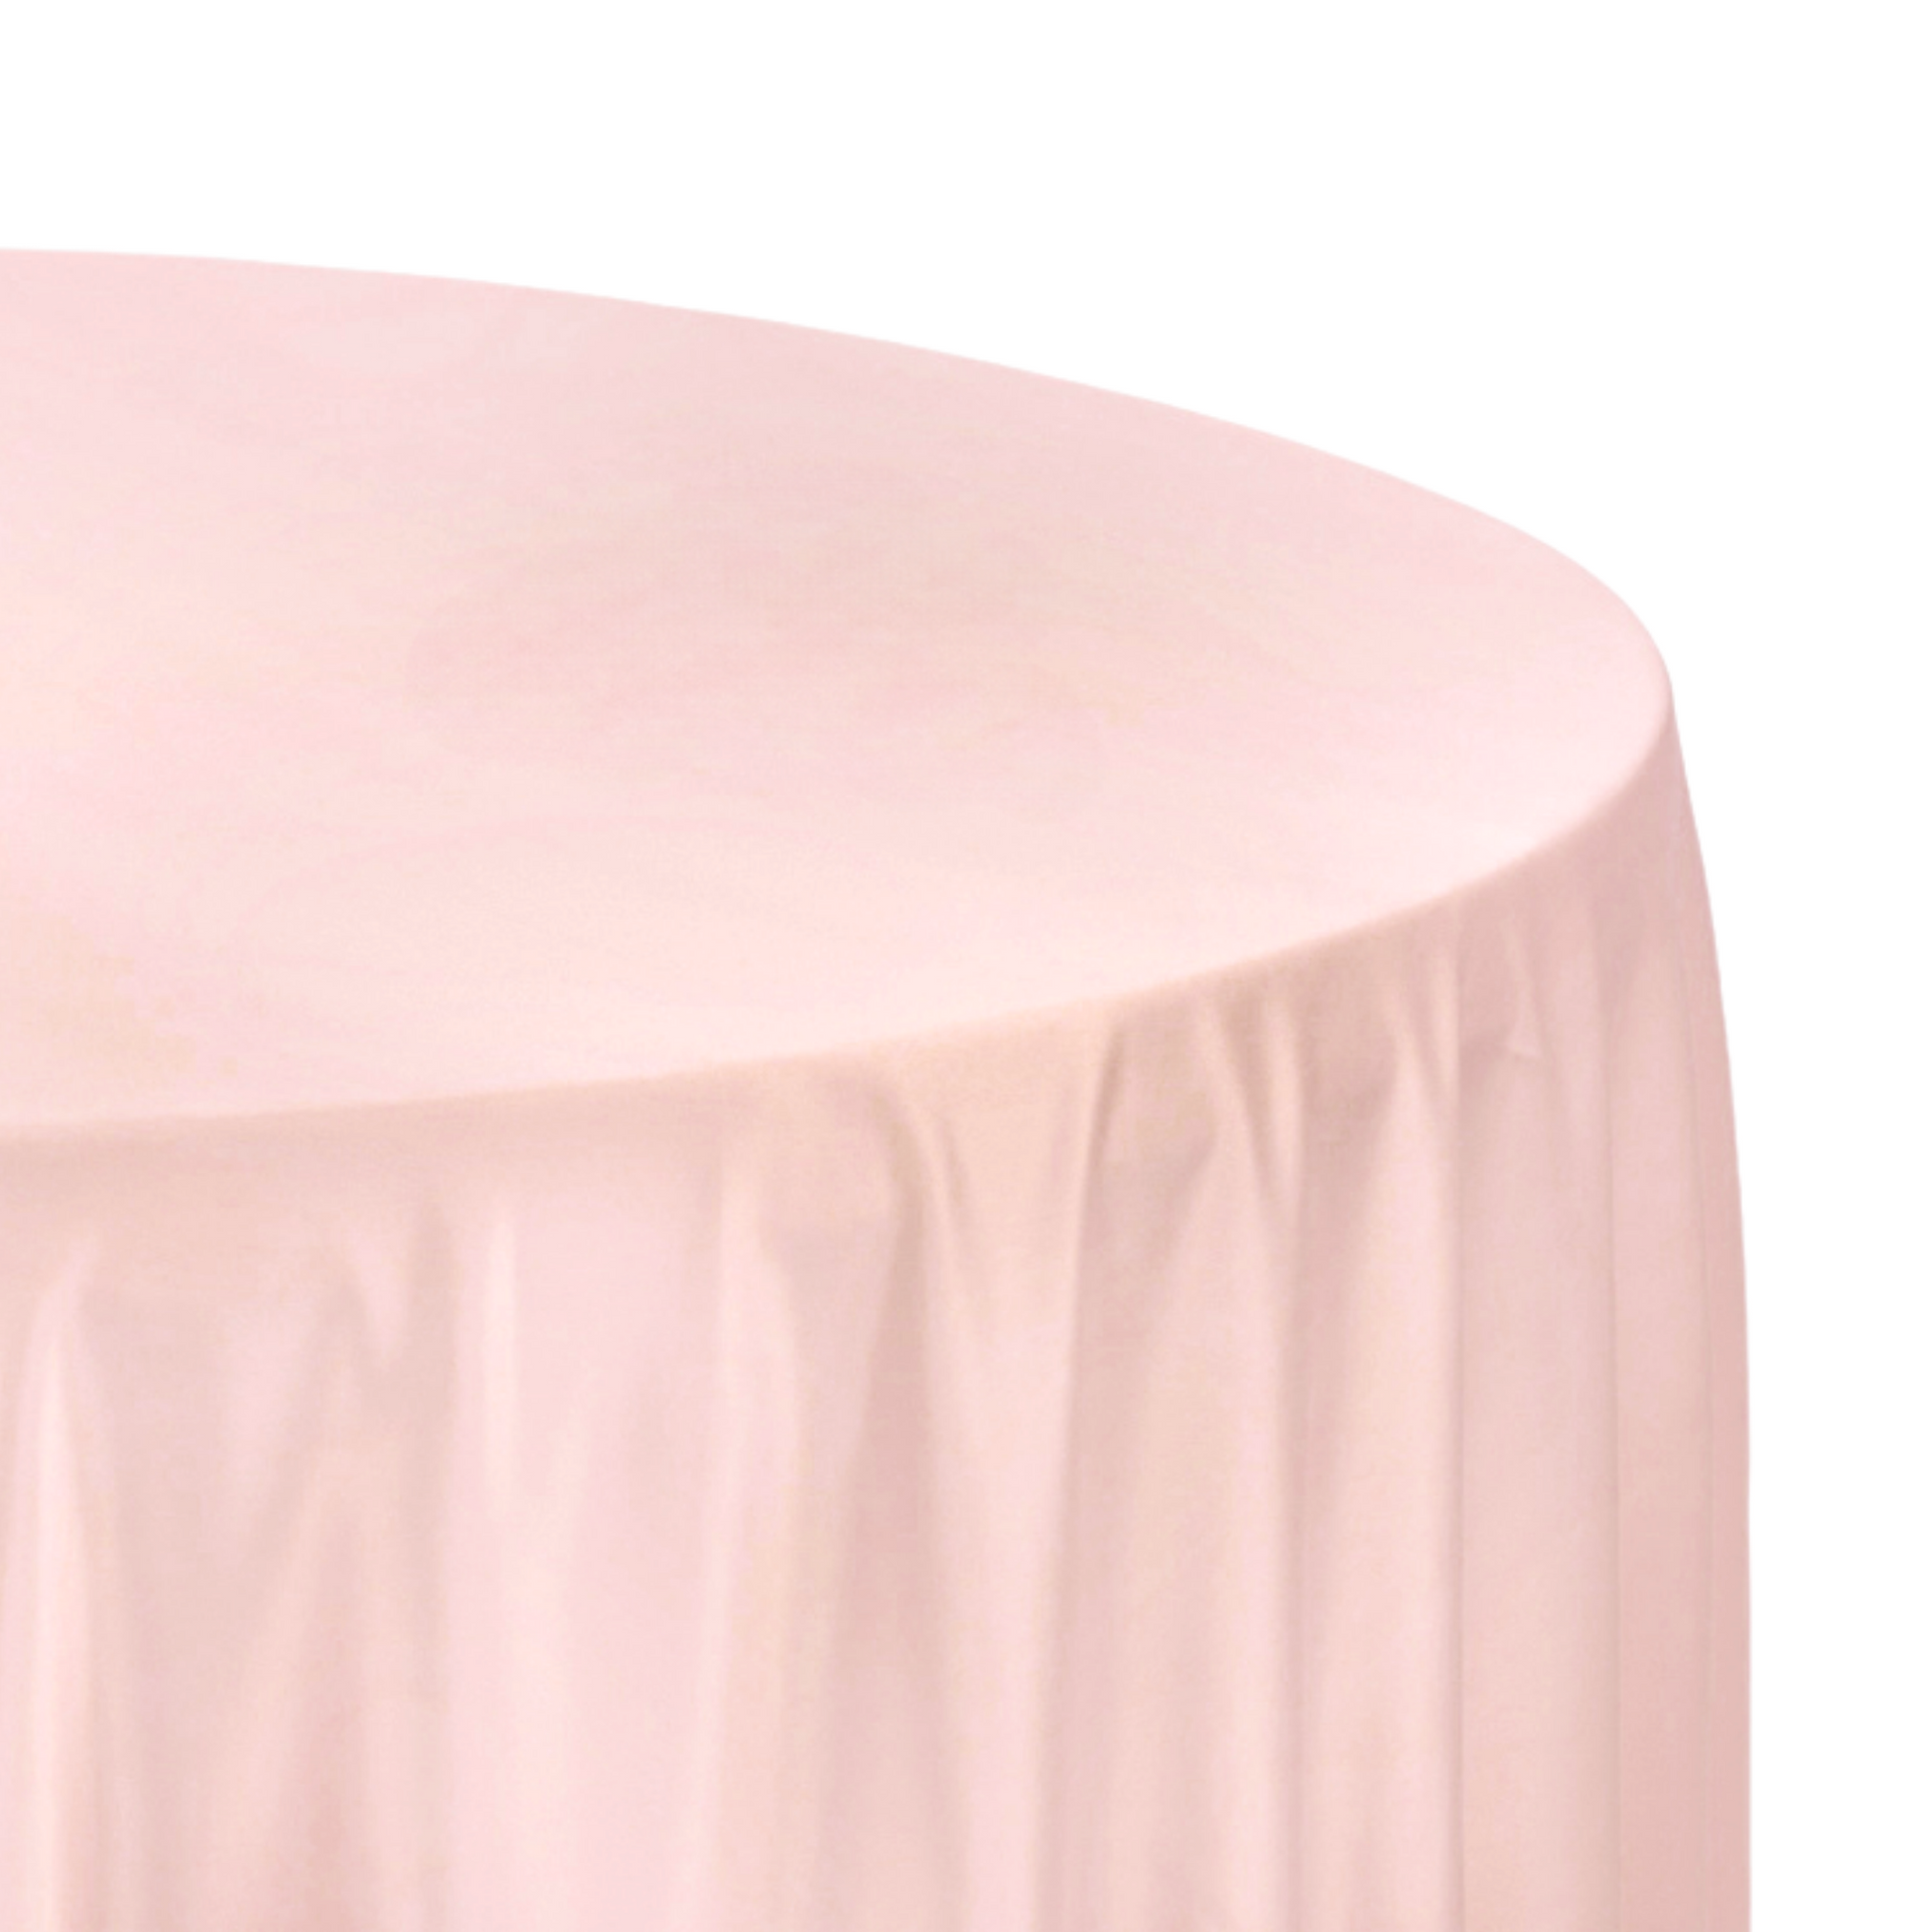 Lamour Satin 120" Round Tablecloth - Blush/Rose Gold